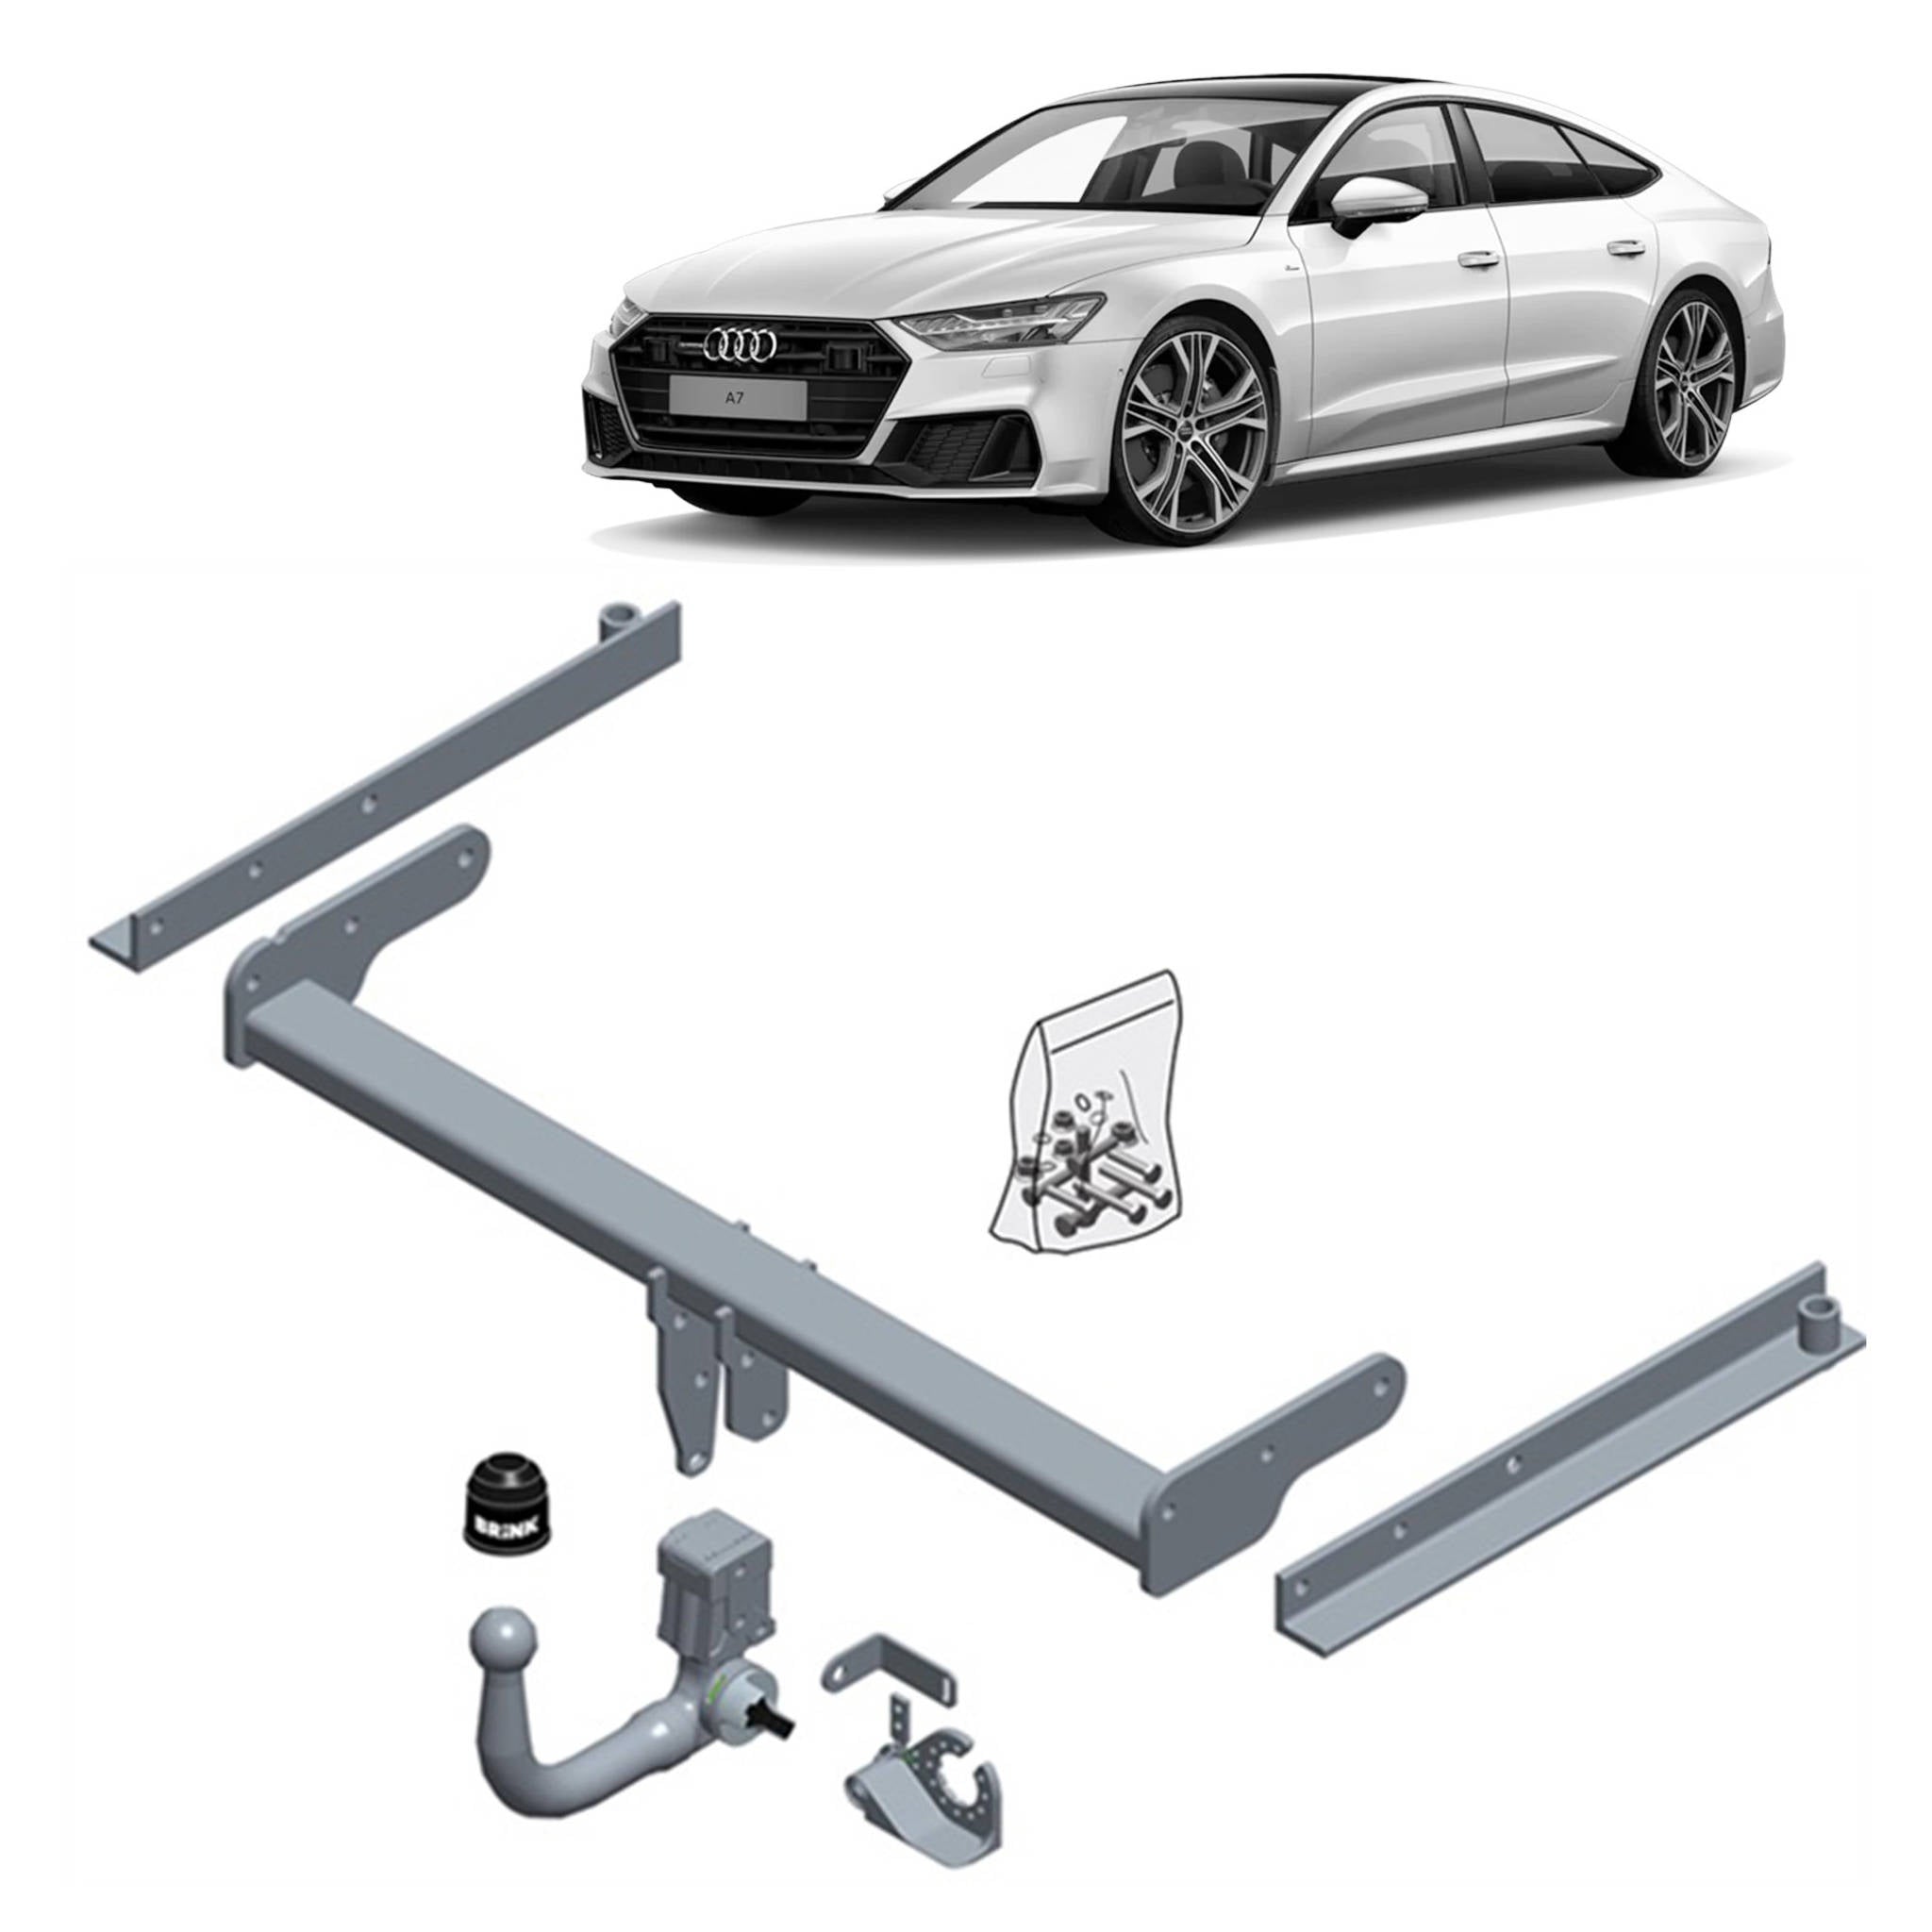 Brink Towbar for Audi A7 (10/2017 - on), Audi A6 (09/2019 - on), Audi A6 (02/2018 - on)